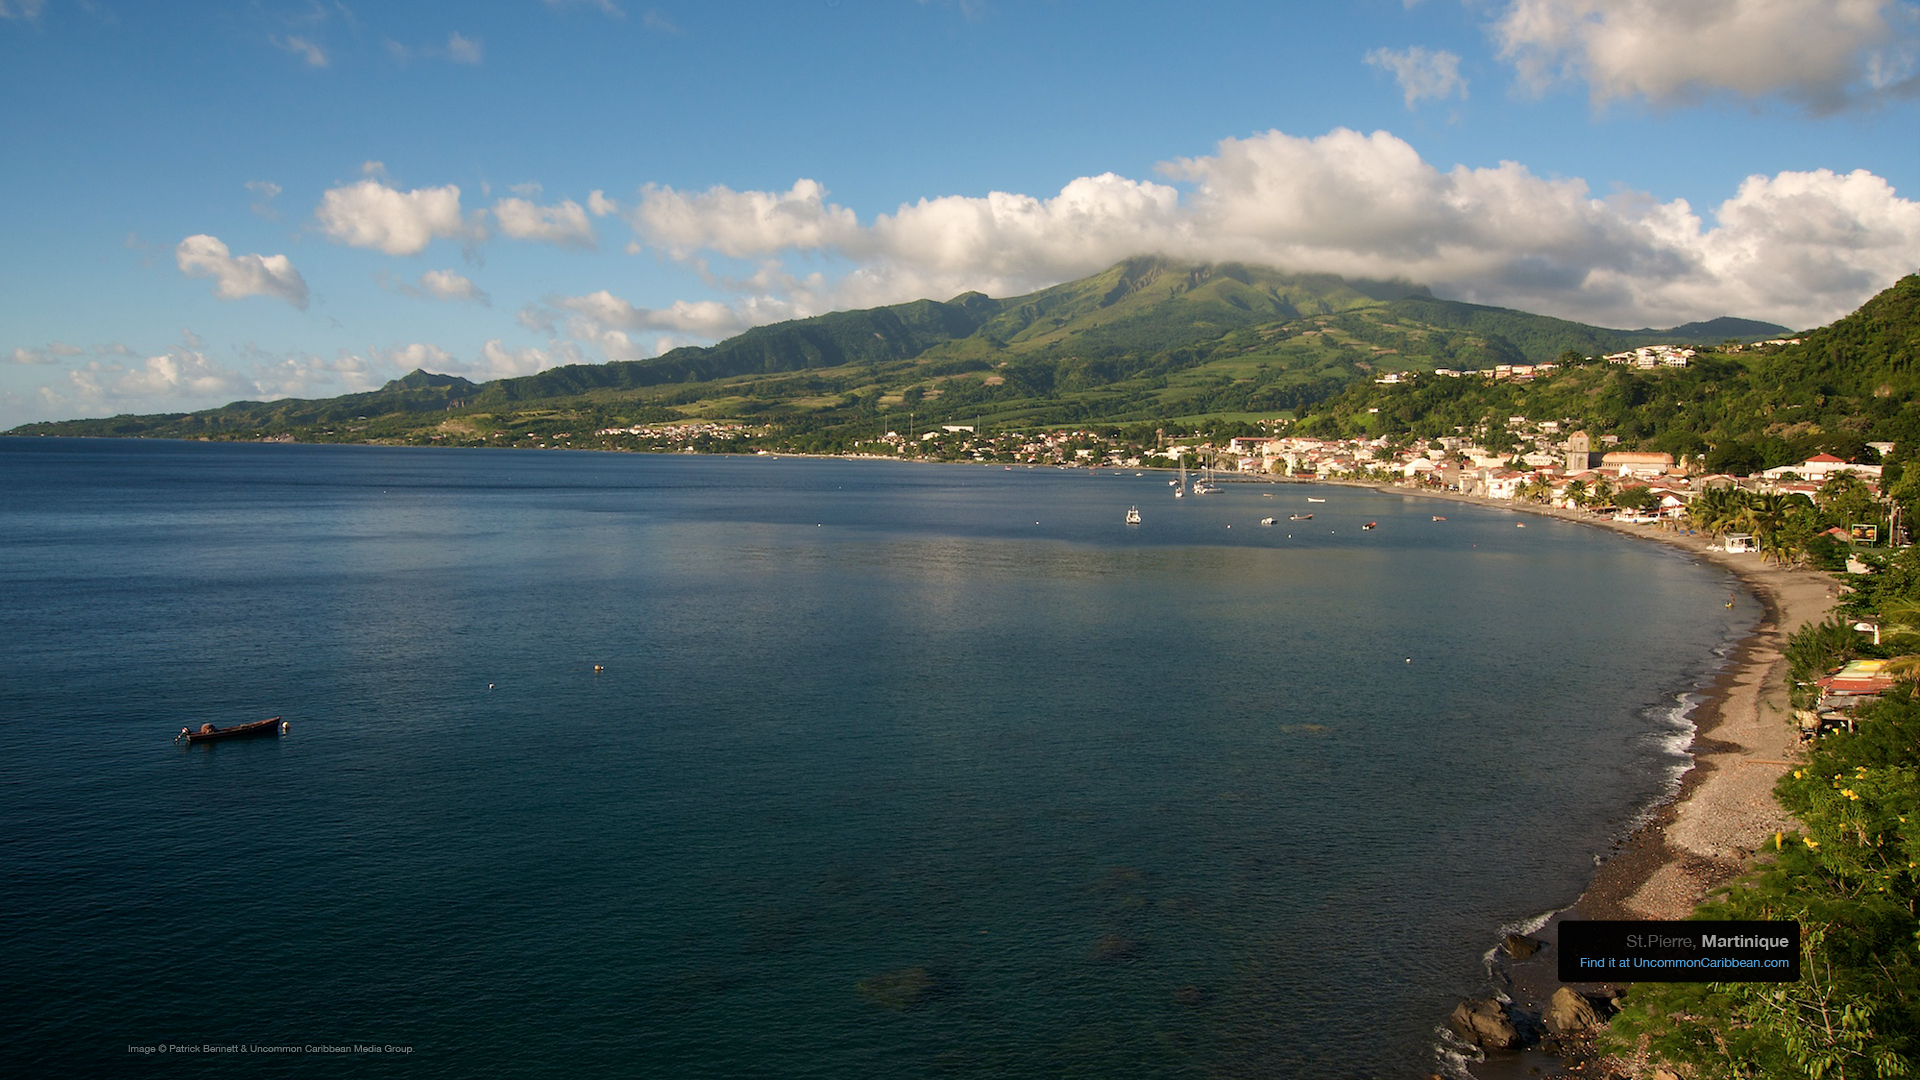 Martinique, St. Pierre